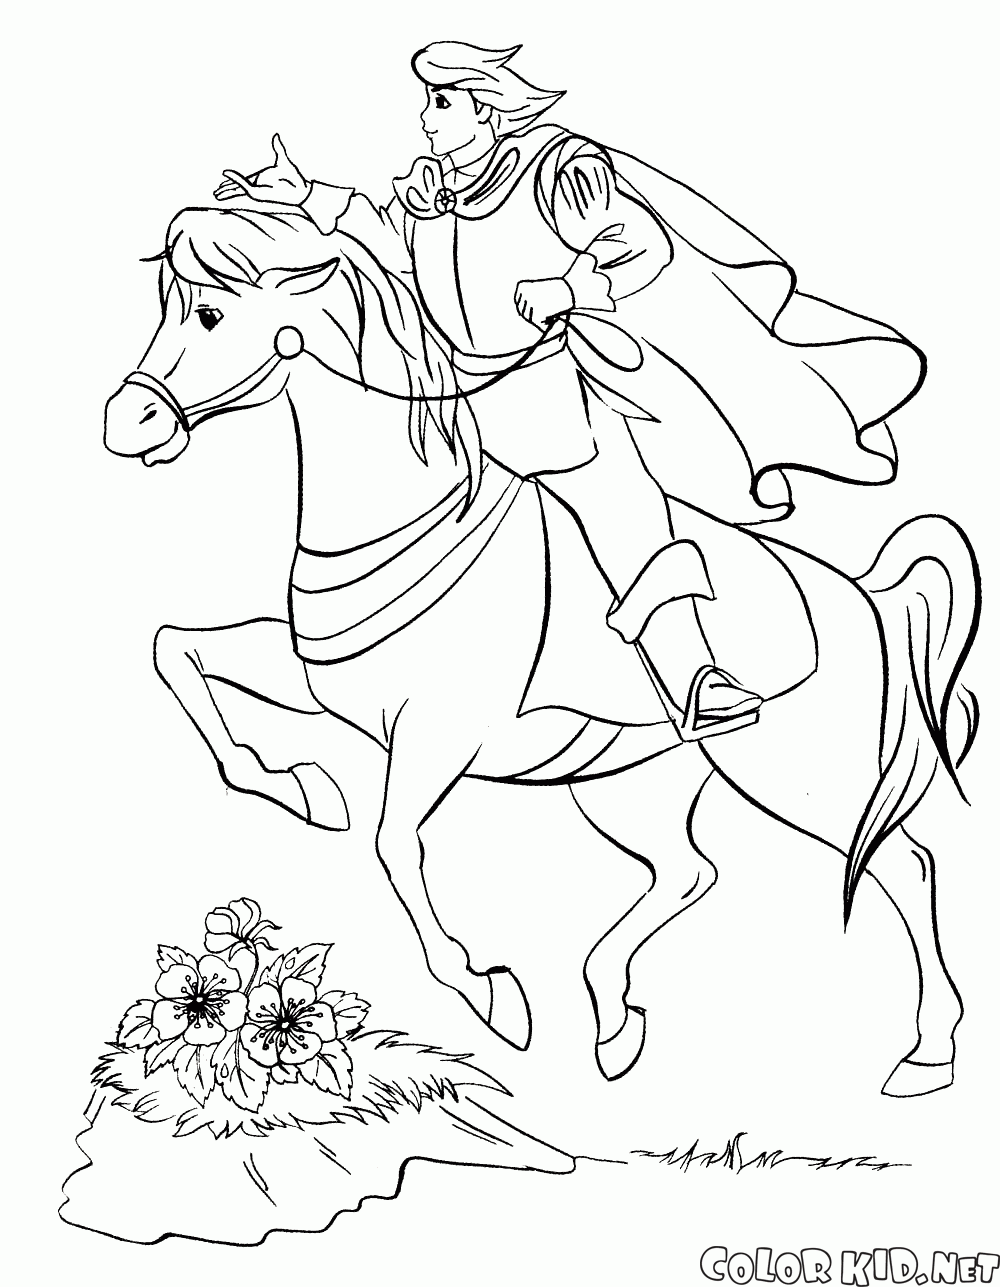 Принц на коне